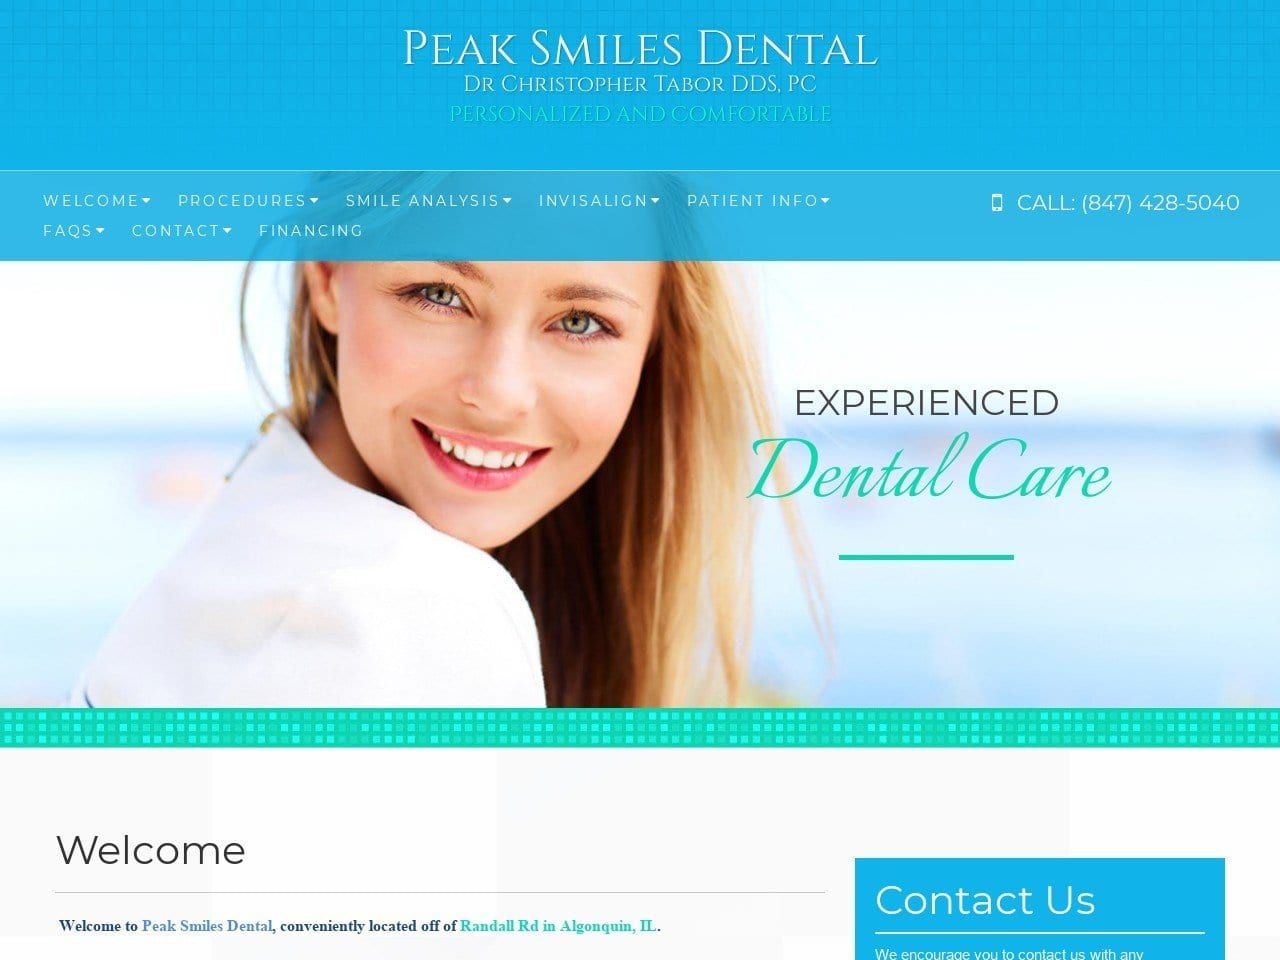 Tabor Dental Care Website Screenshot from tabordentalcare.com